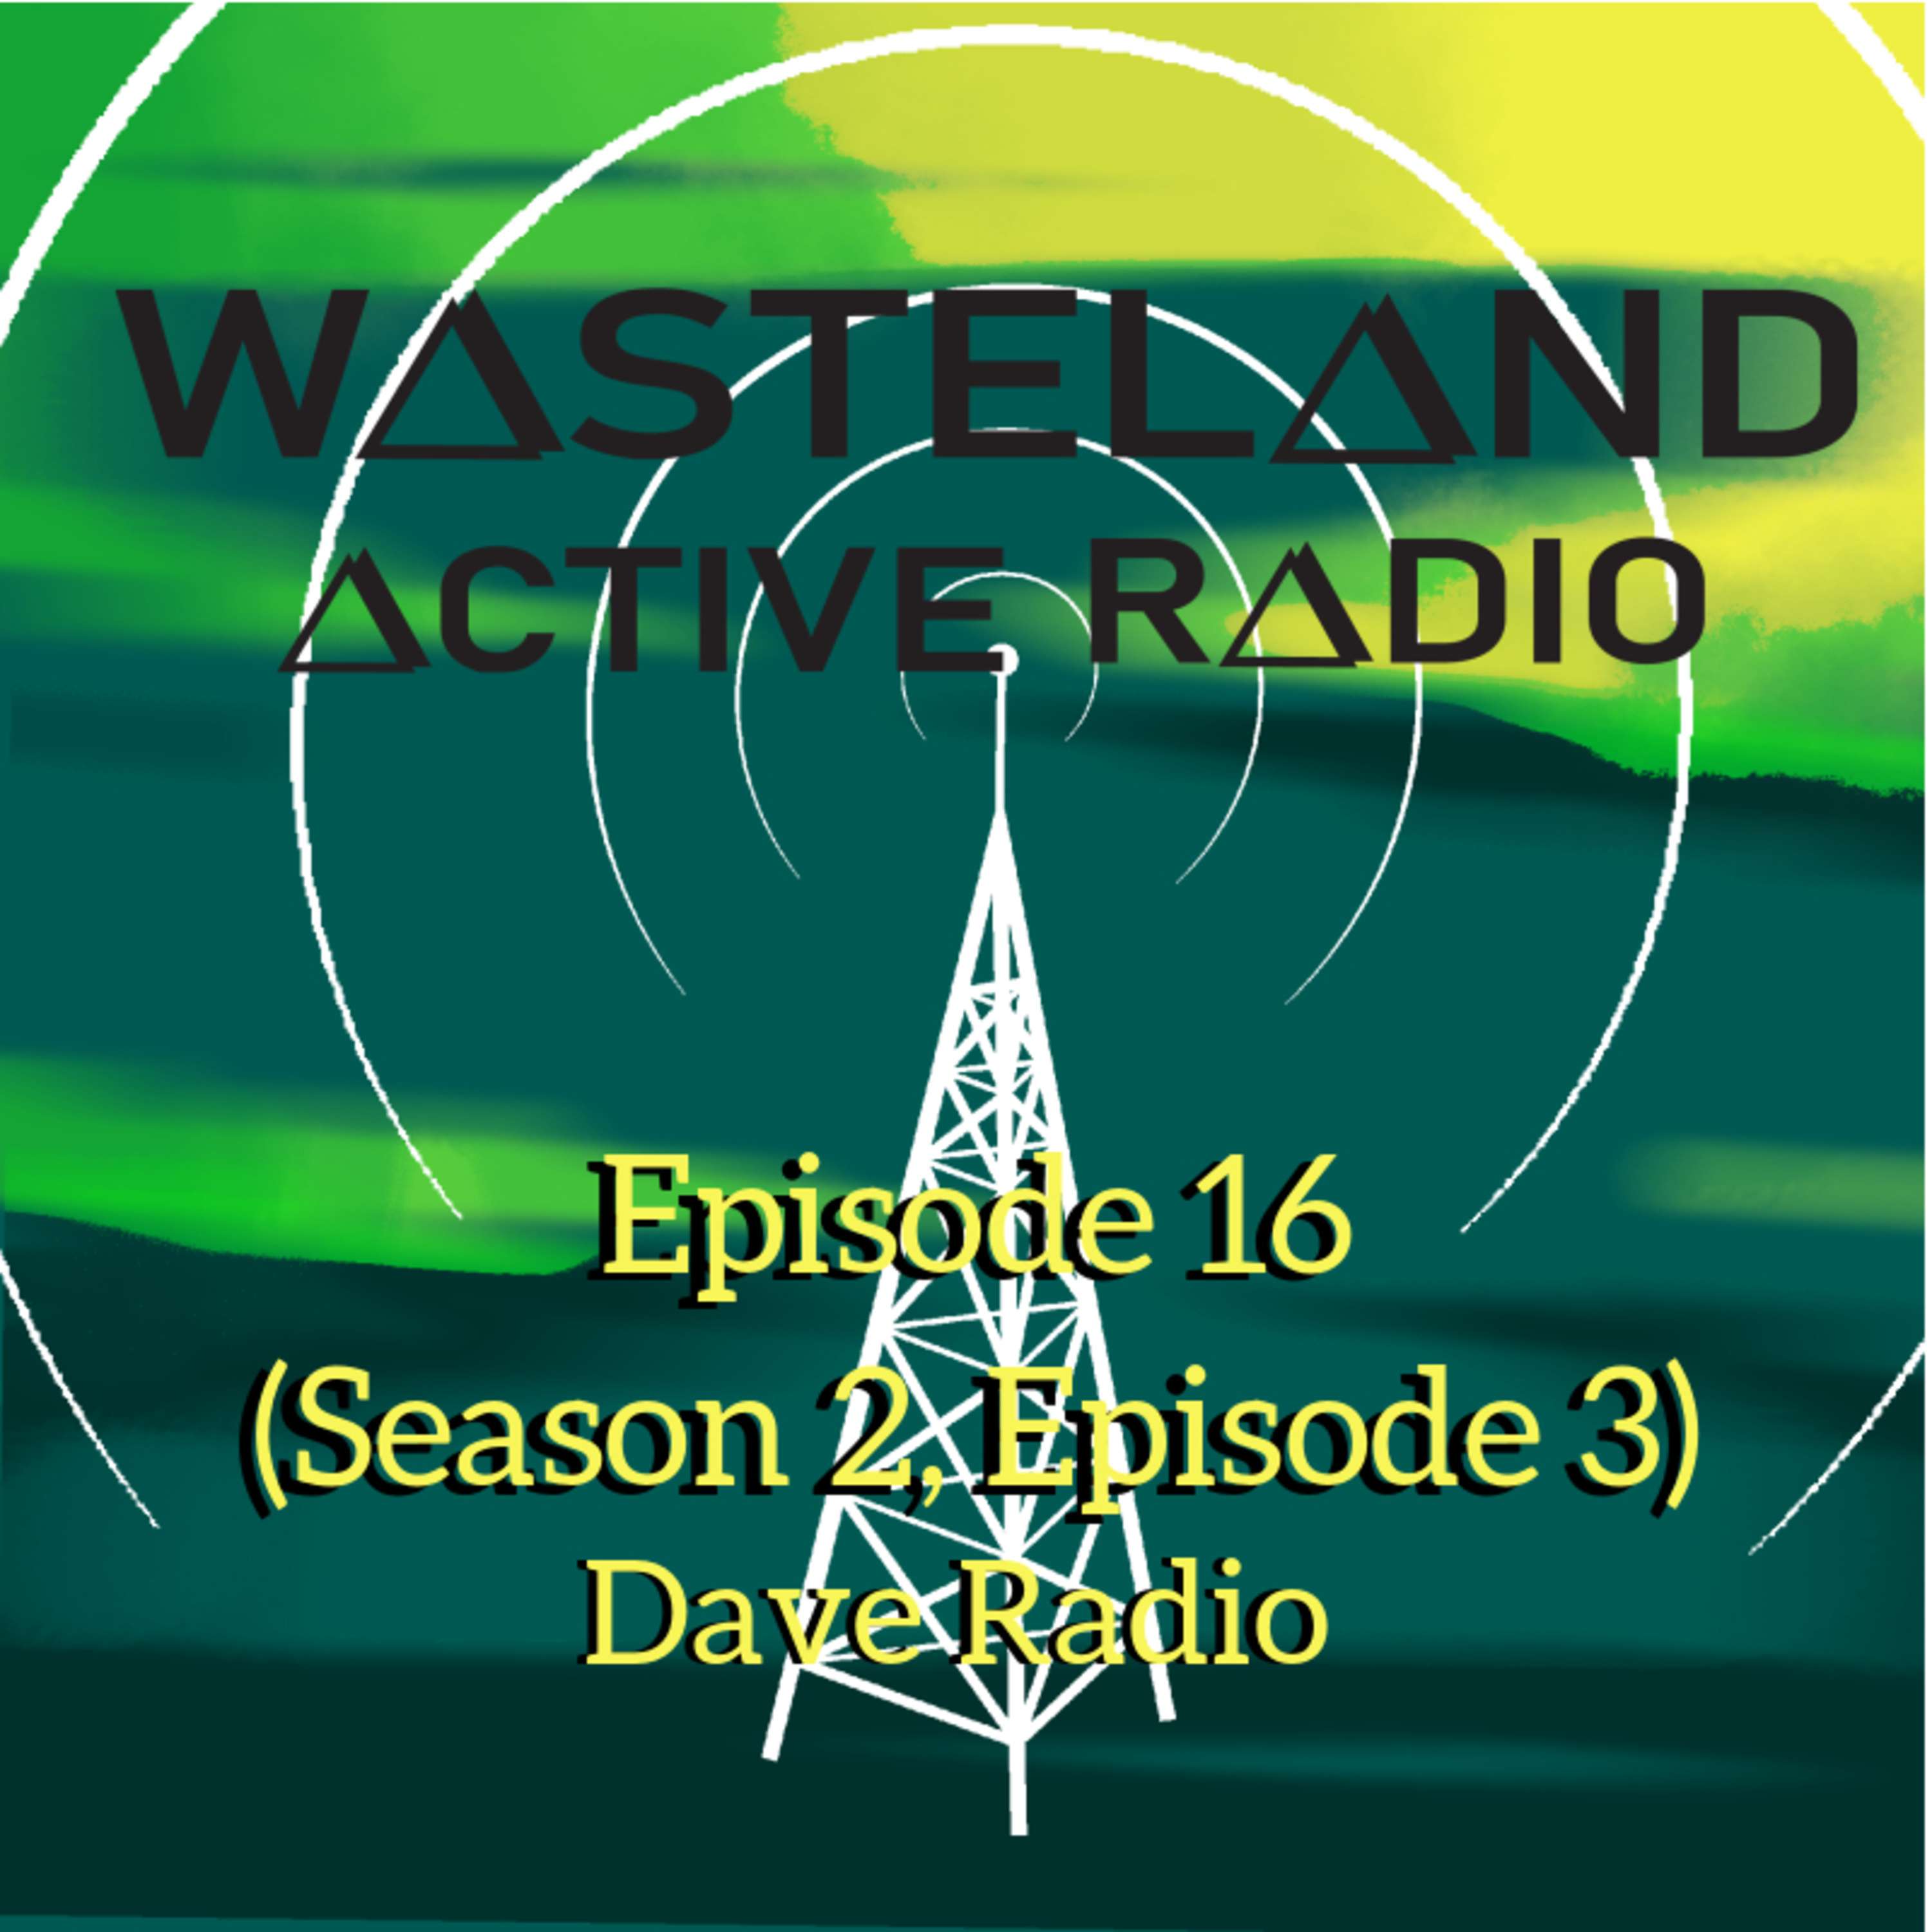 Episode 16: Dave Radio